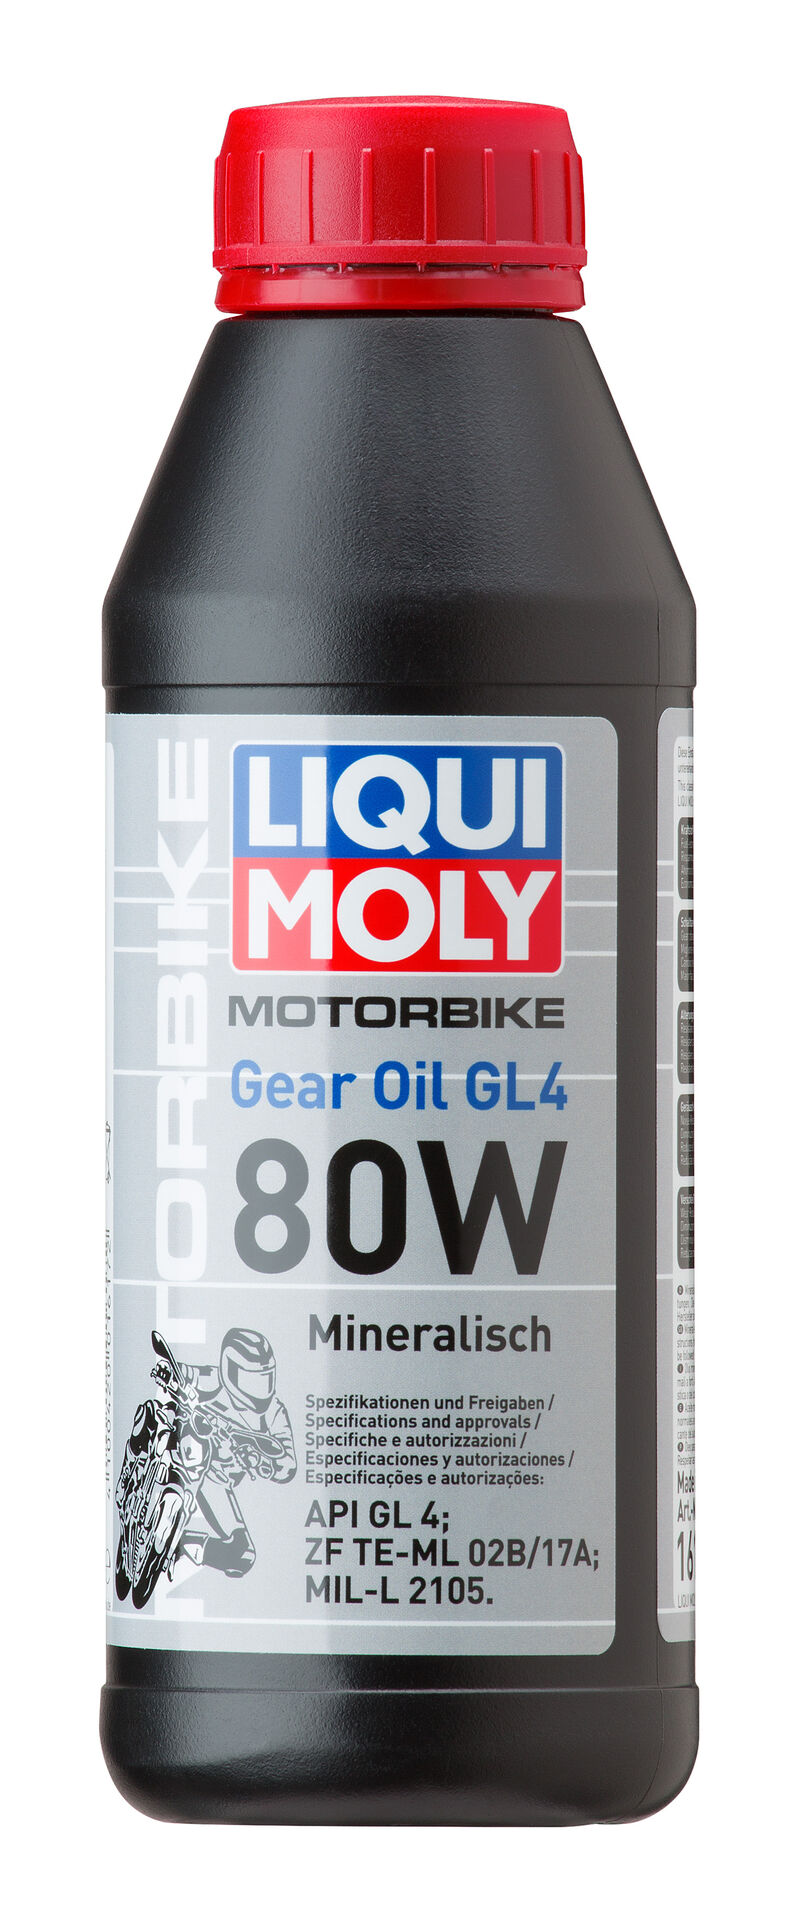 Liqui Moly Motorbike Gear Oil GL4 80W Mineralisch Motorrad Getriebeöl 500 ml